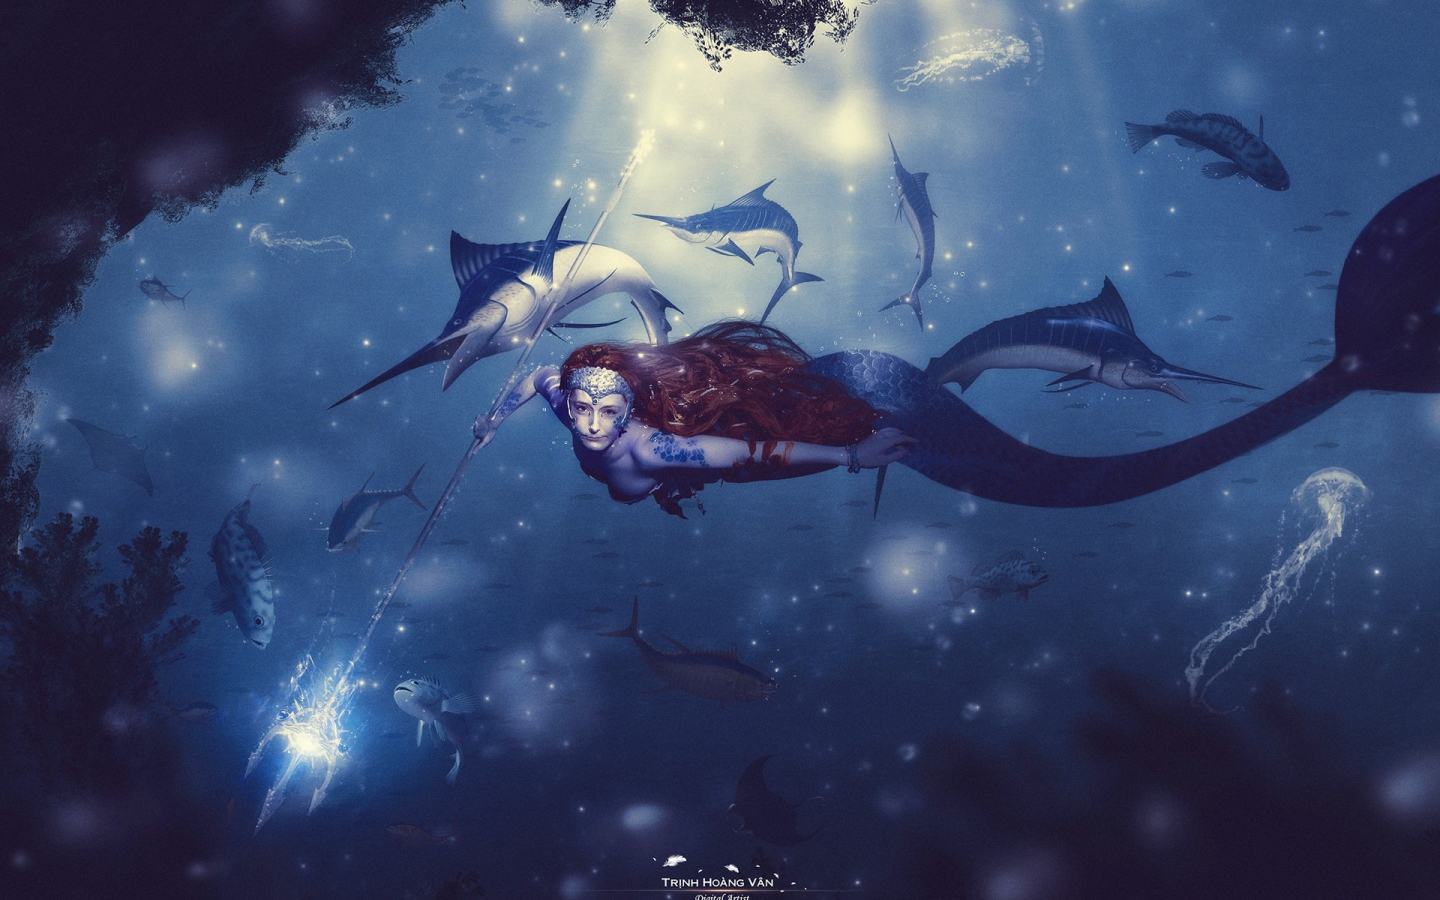 Mermaid Queen for 1440 x 900 widescreen resolution